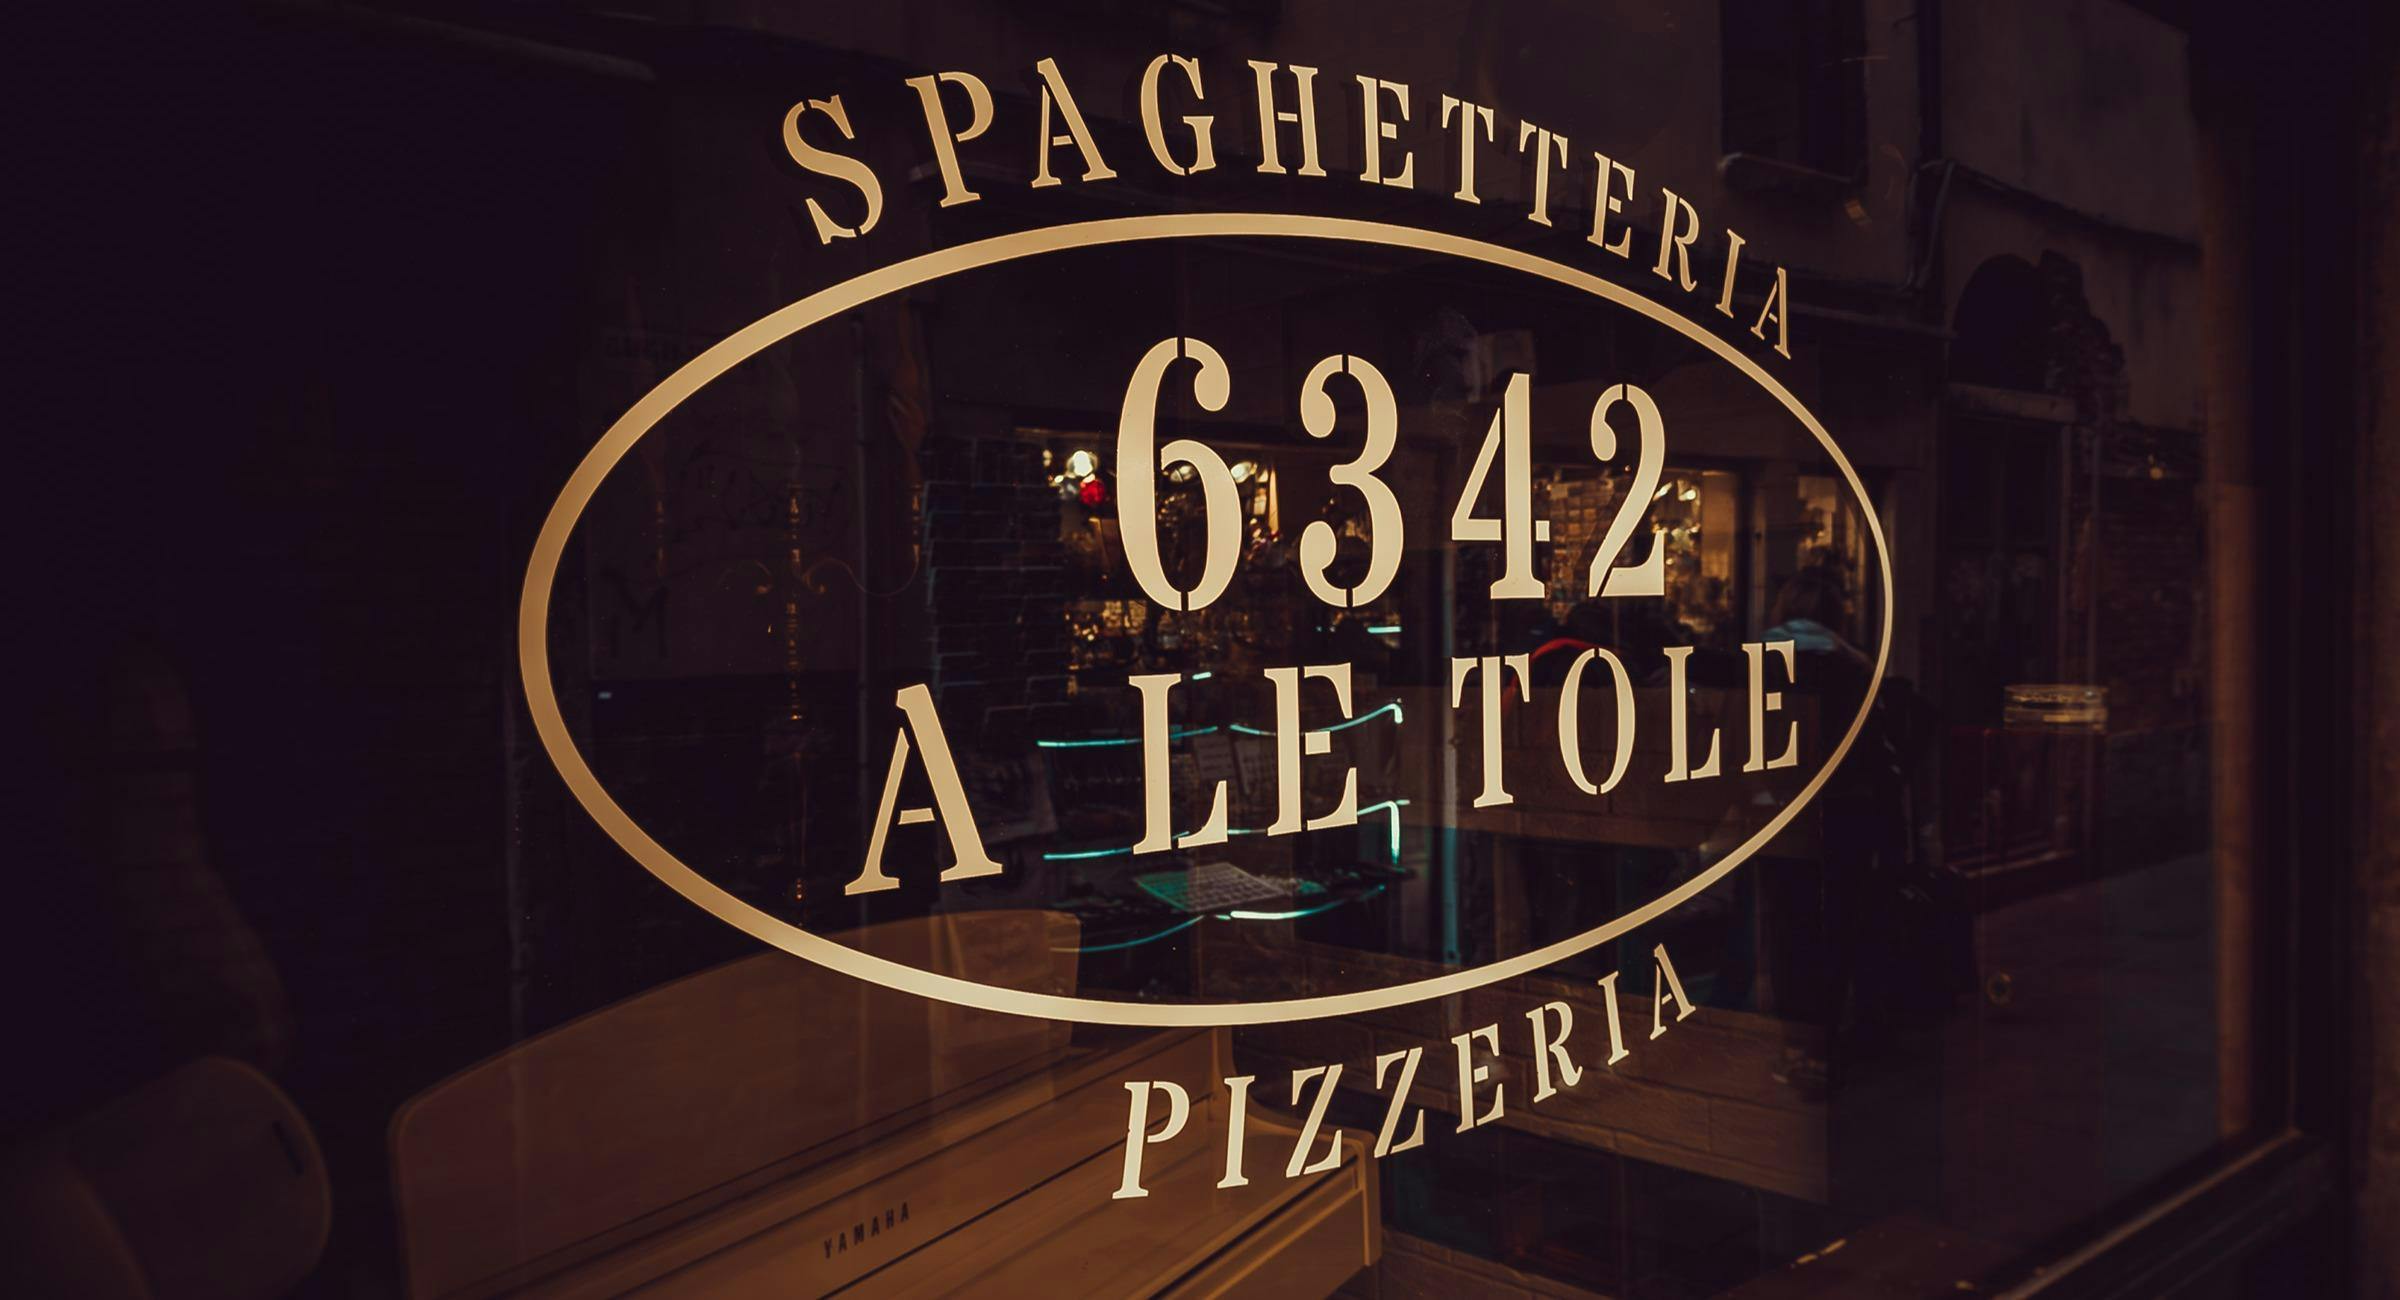 Spaghetteria 6342 A Le Tole en Venice